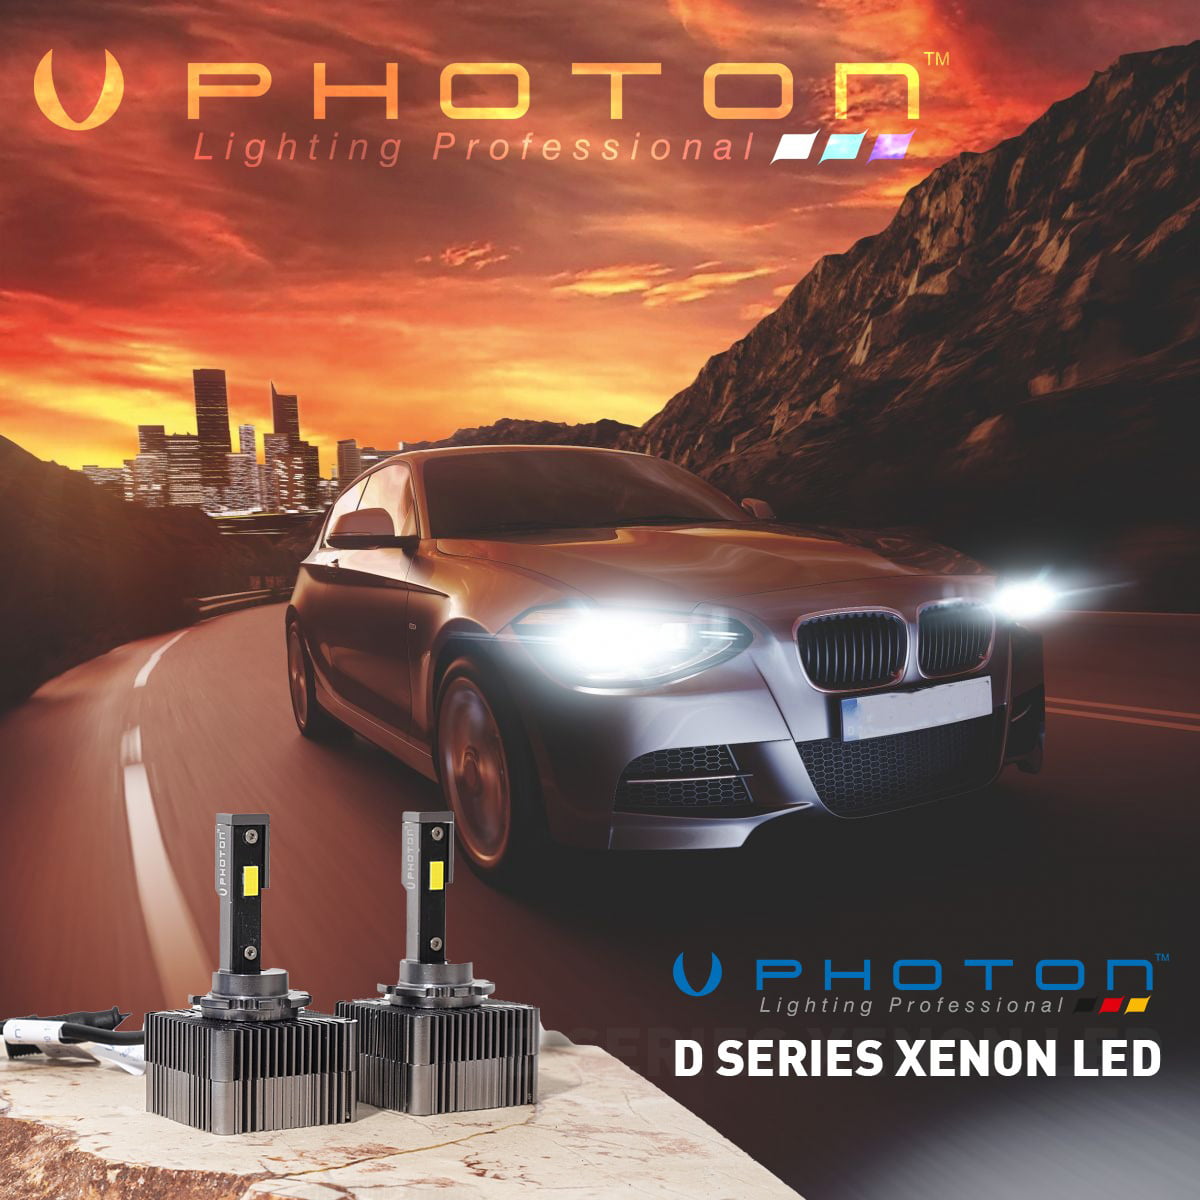 Photon D3S 10000 Lumens Led Xenon - Photon Online